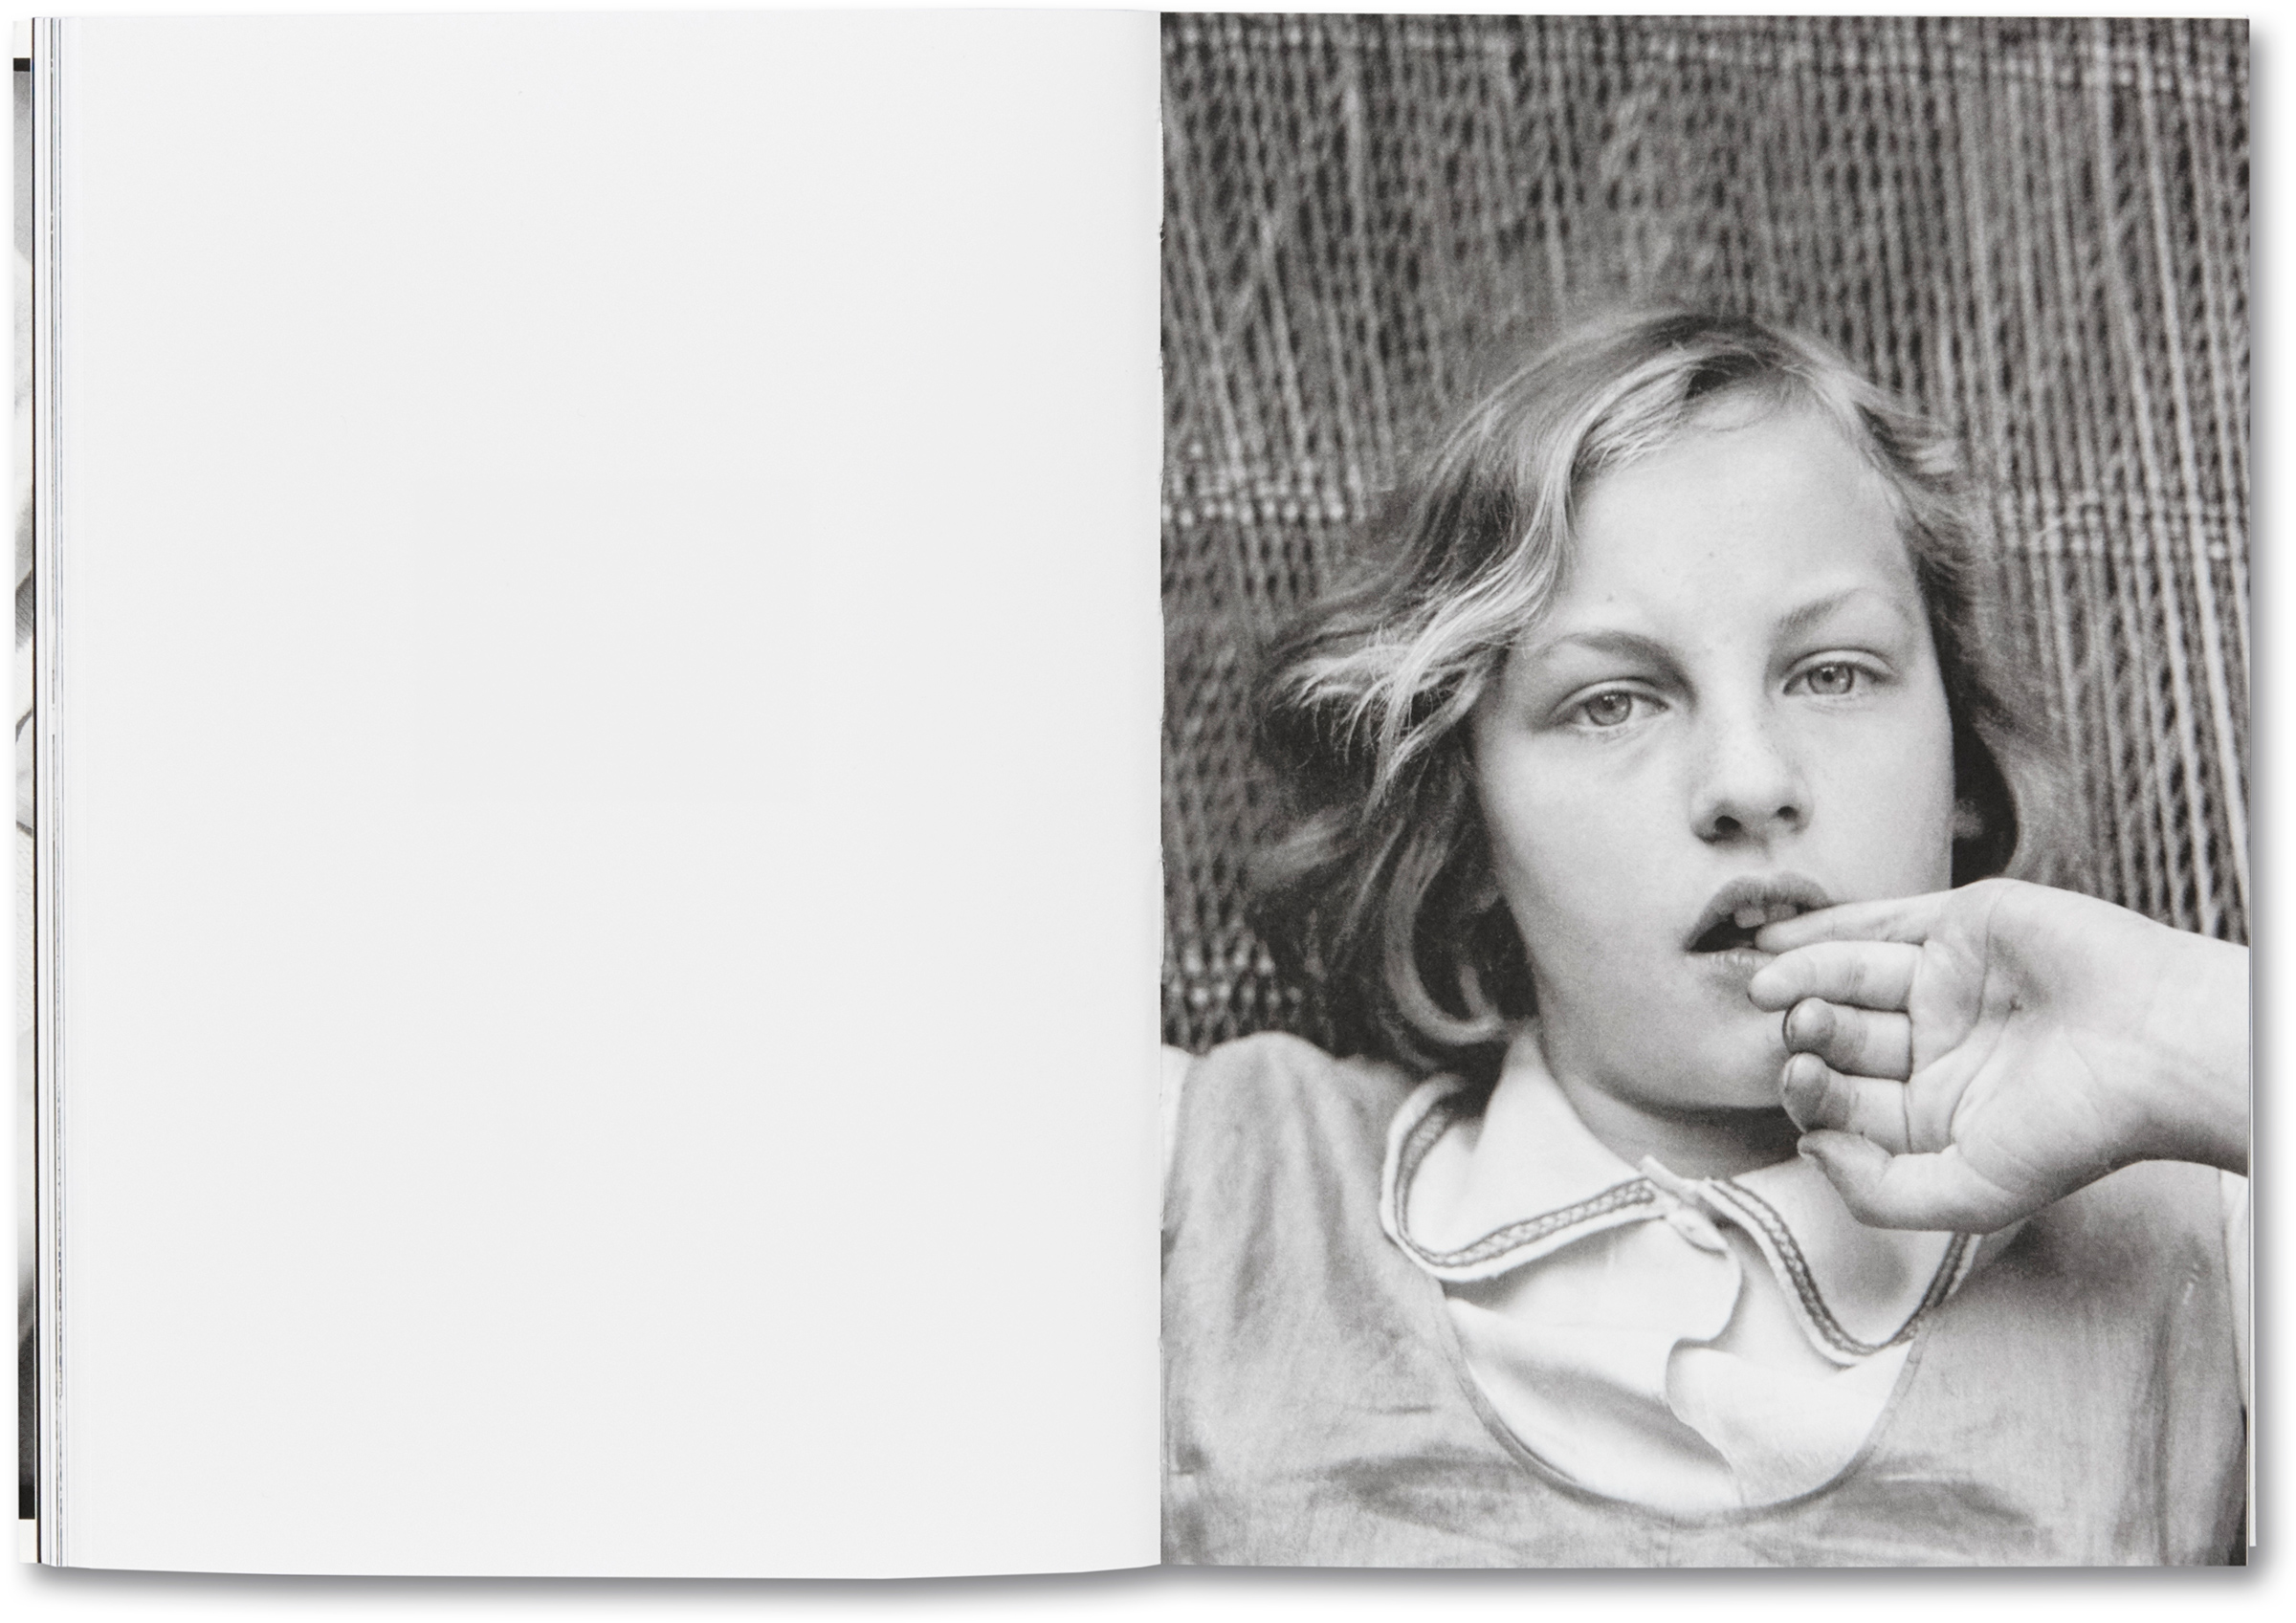 Untitled, from the book 'Day Sleeper, Dorothea Lange-Sam Contis'. (Dorothea Lange—courtesy of MACK)